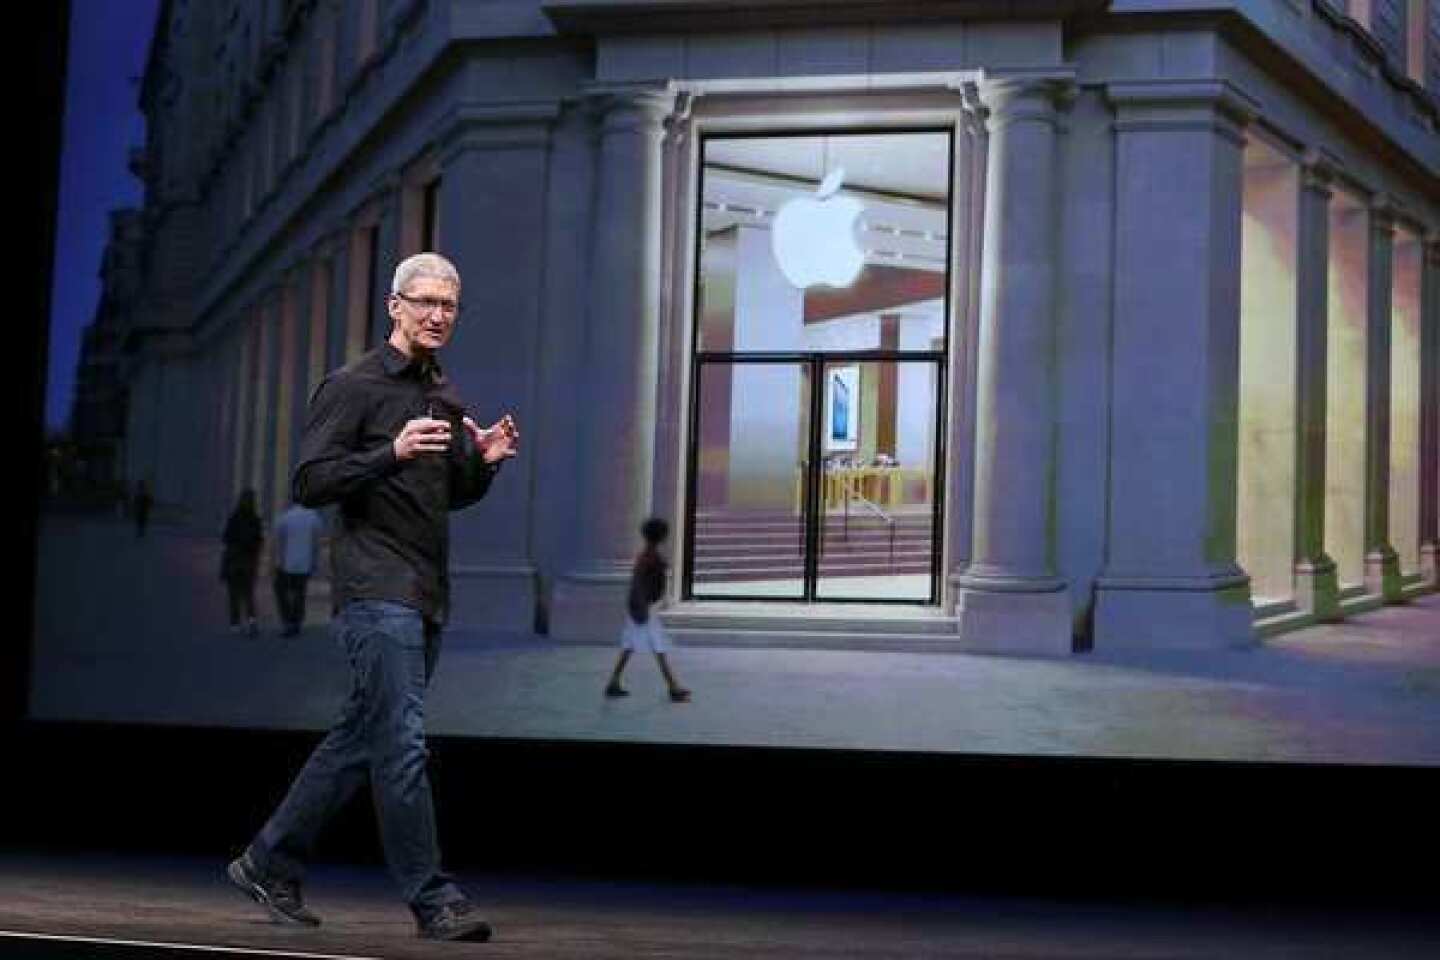 Apple introduces iPhone 5